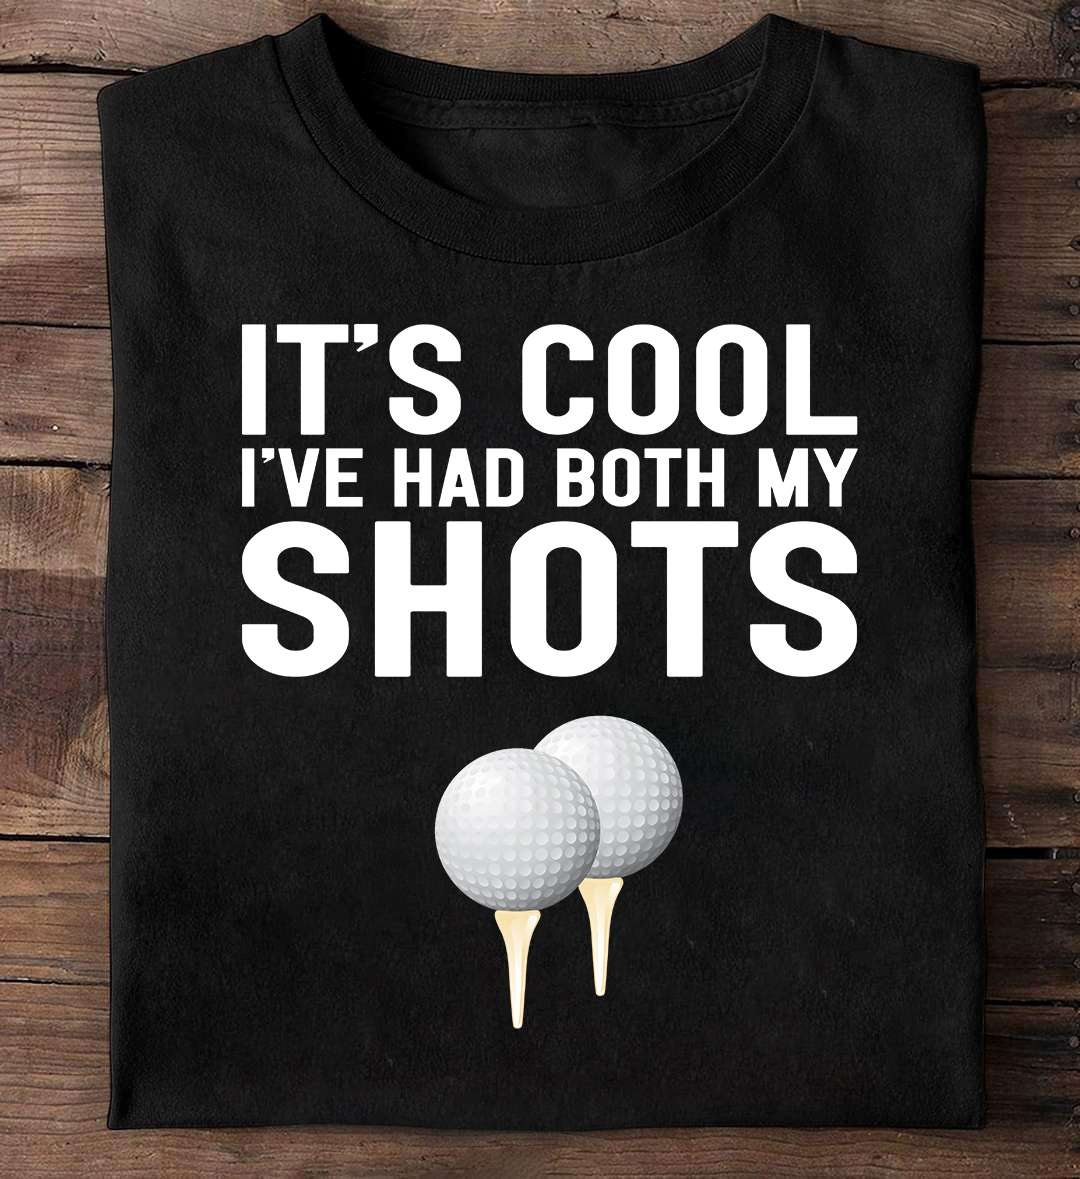 It's cool I've had both my shots - Both golf shots, golf fancy sport